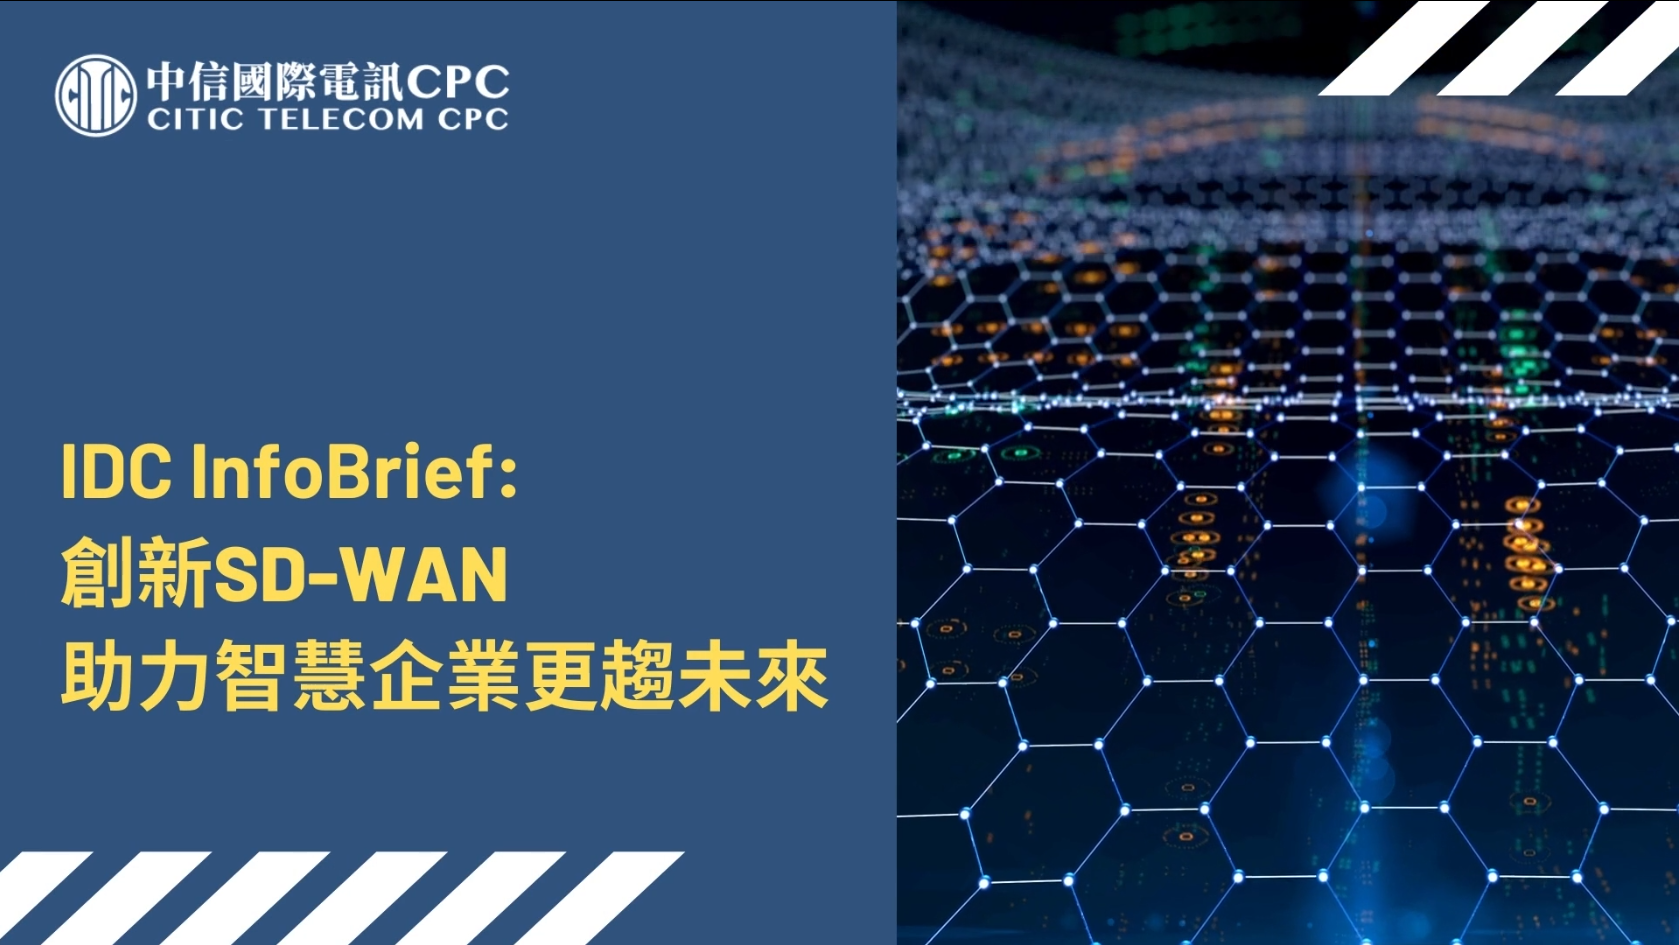 SD-WAN融合人工智能 激發潛在商業價值